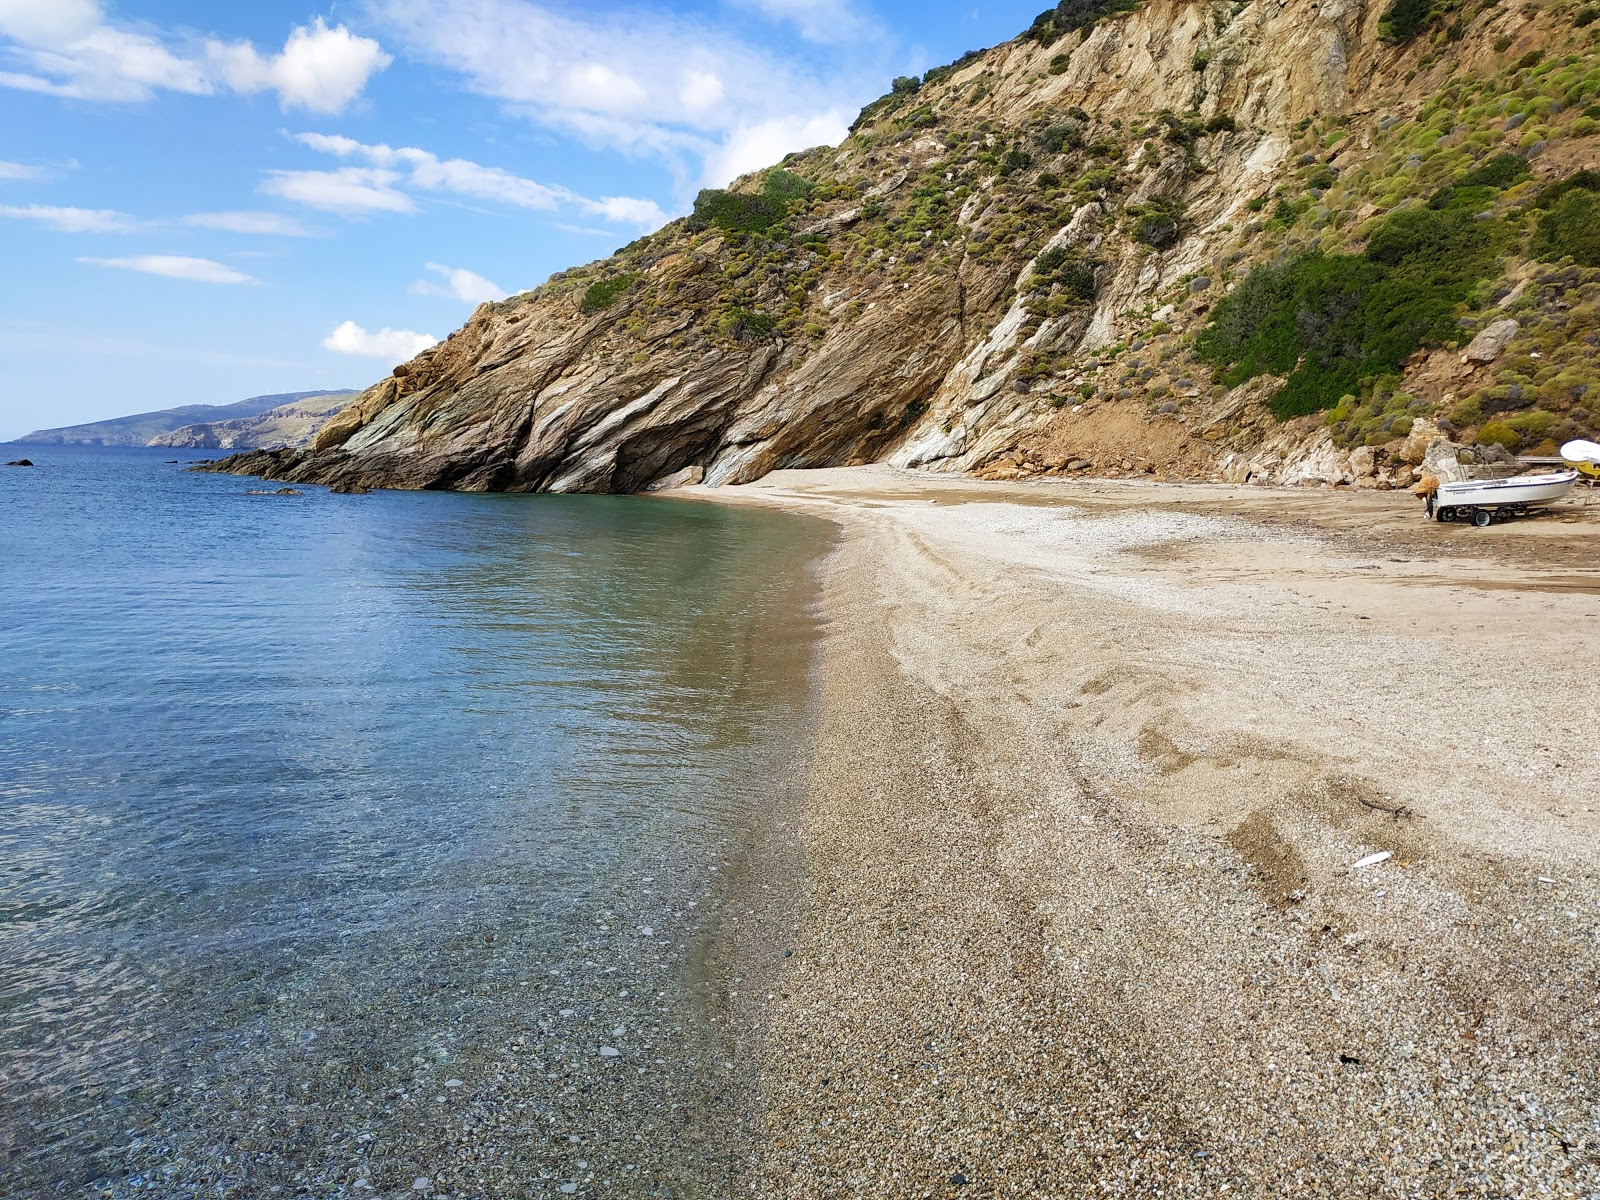 Fotografija Amygdalias beach z rjavi fini kamenček površino